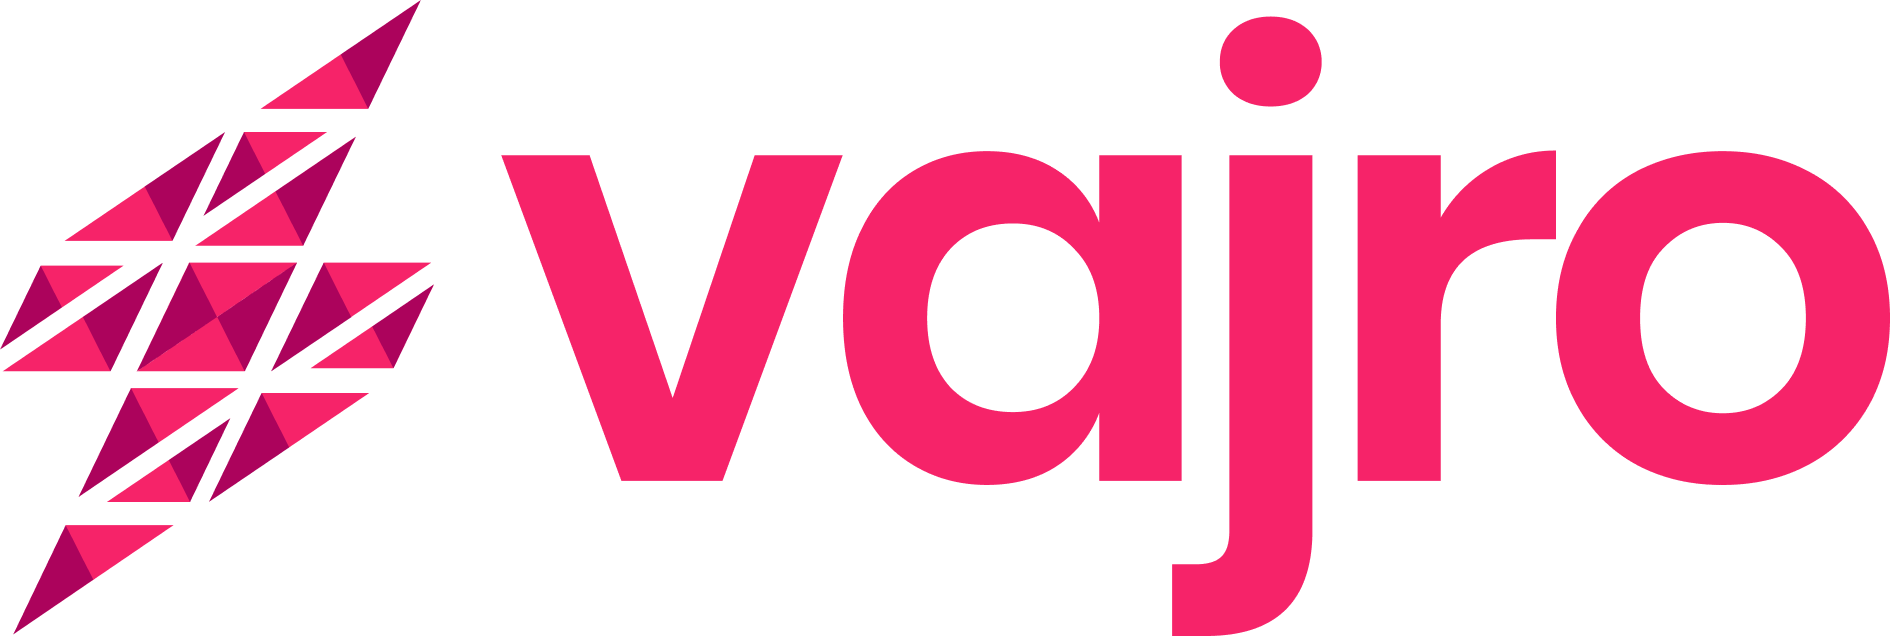 vajro logo